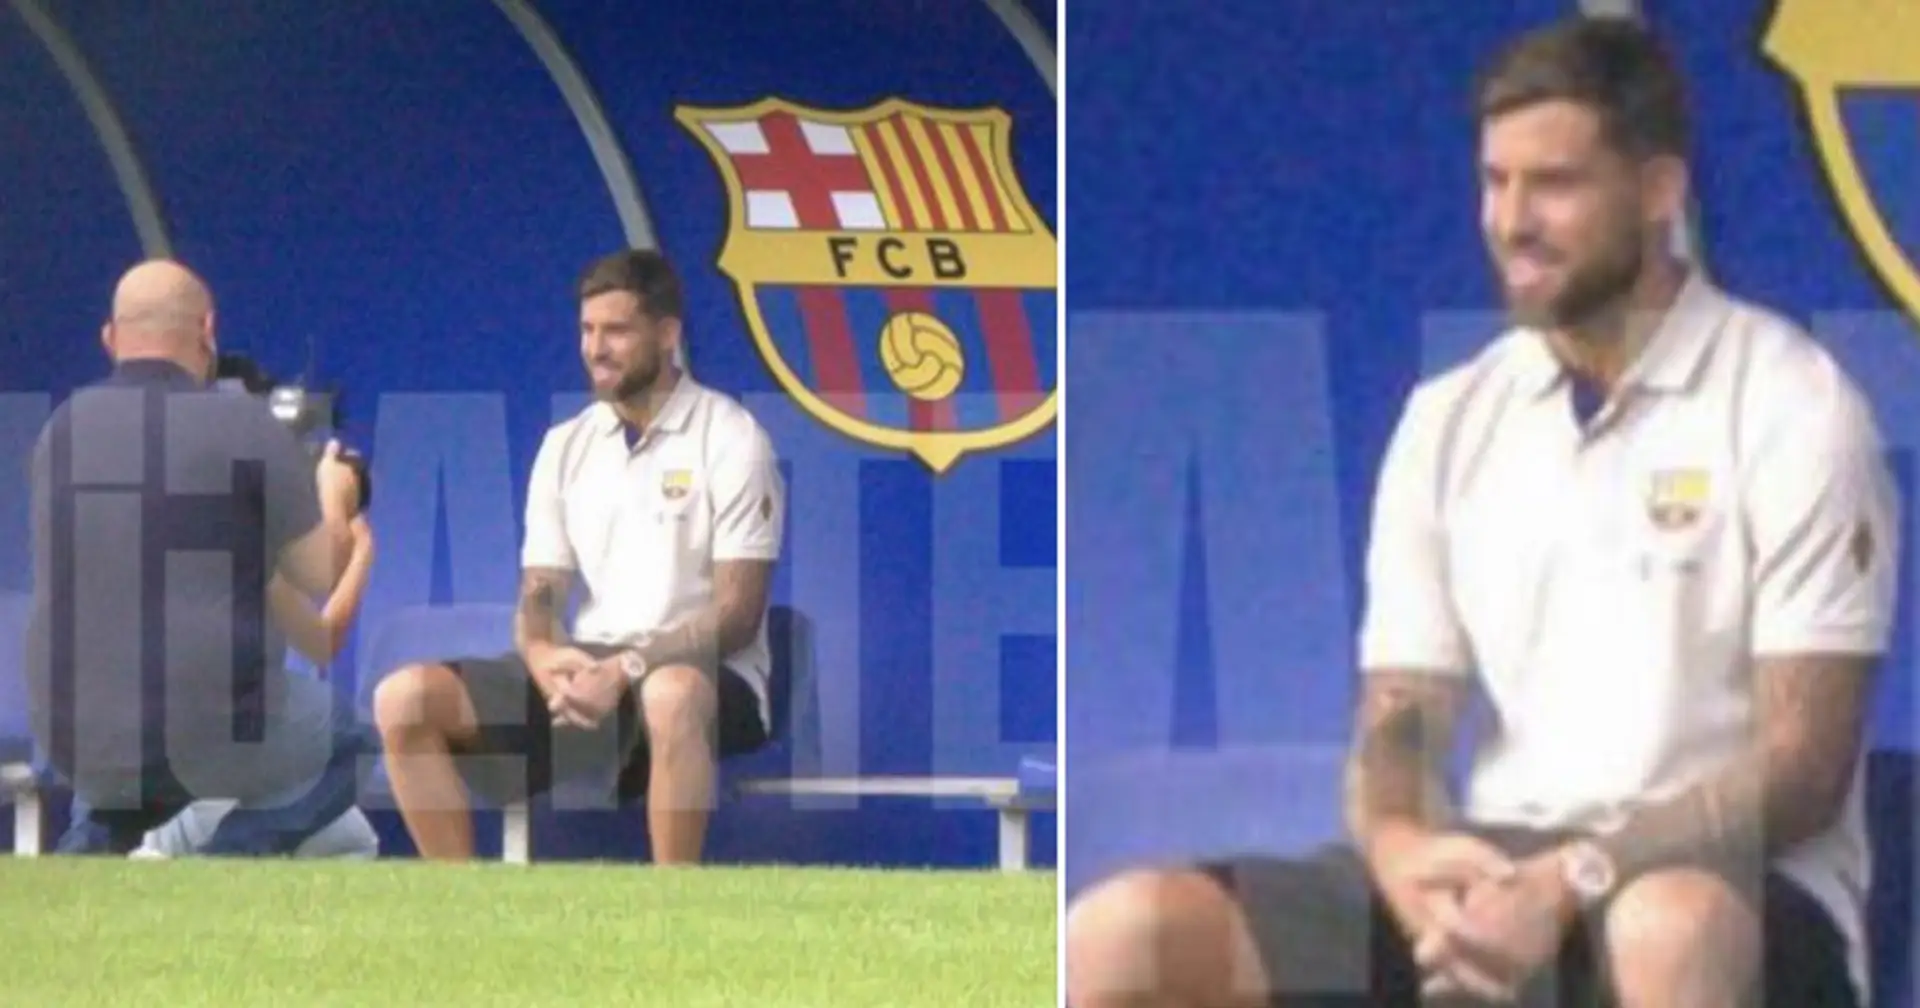 Inigo Martinez spotted at Barca's training ground, rocking Blaugrana shirt already